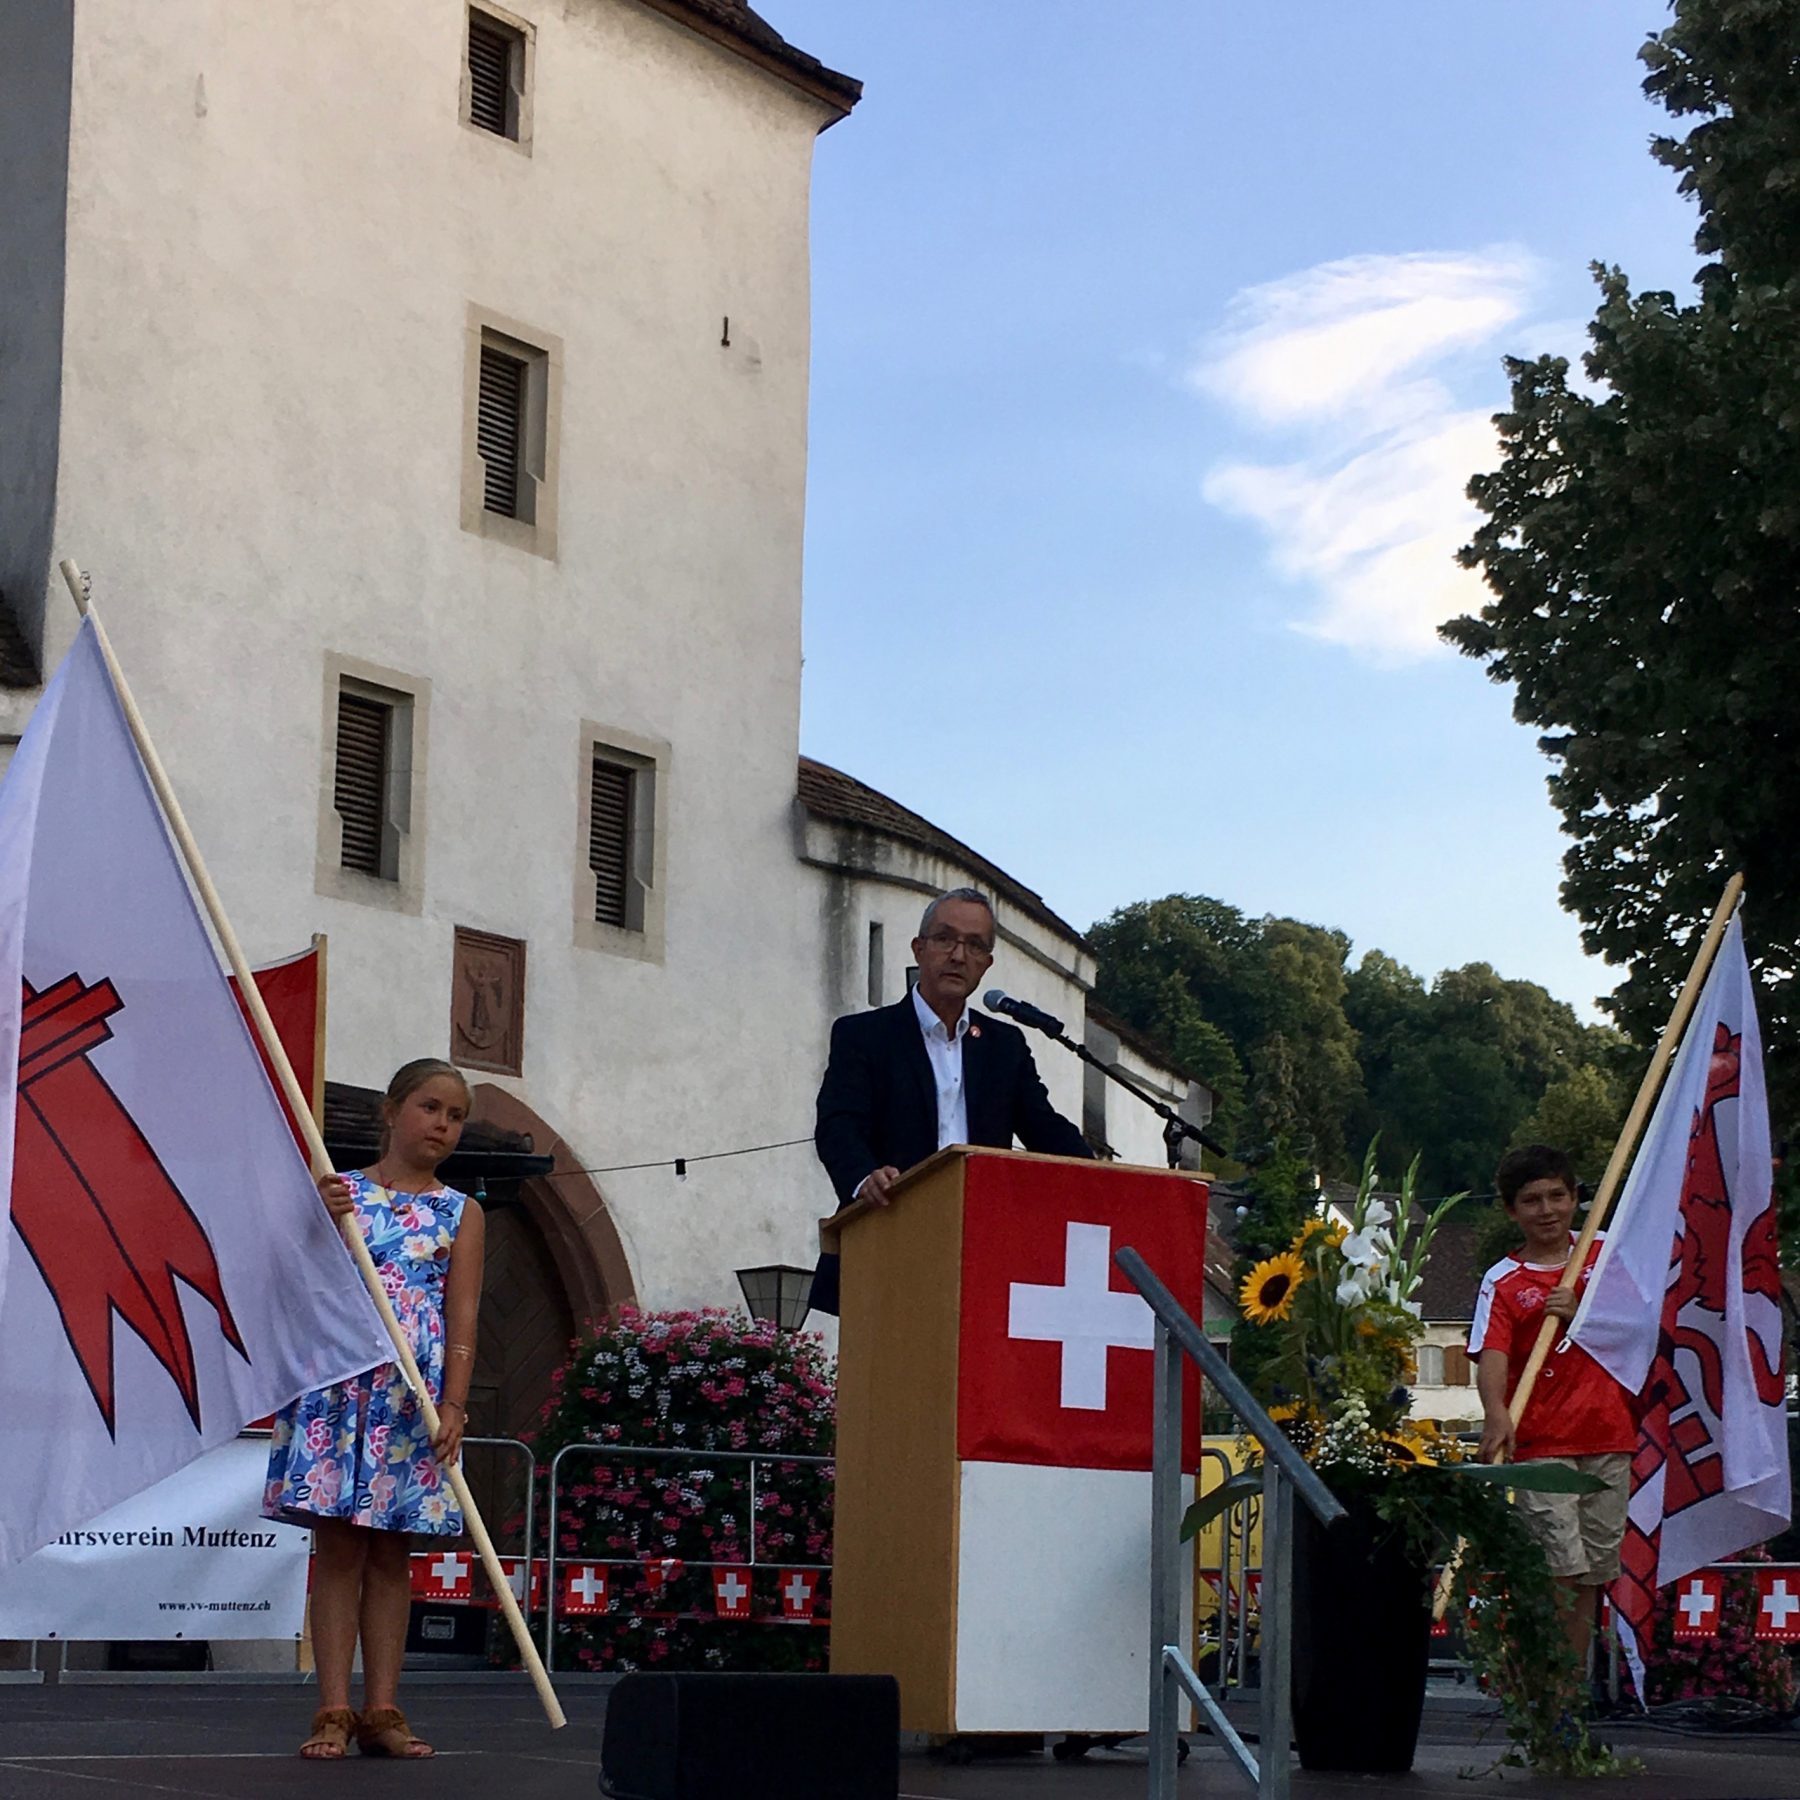 Thomas Weber, Bundesfeier 1. August 2018, Muttenz/Reinach